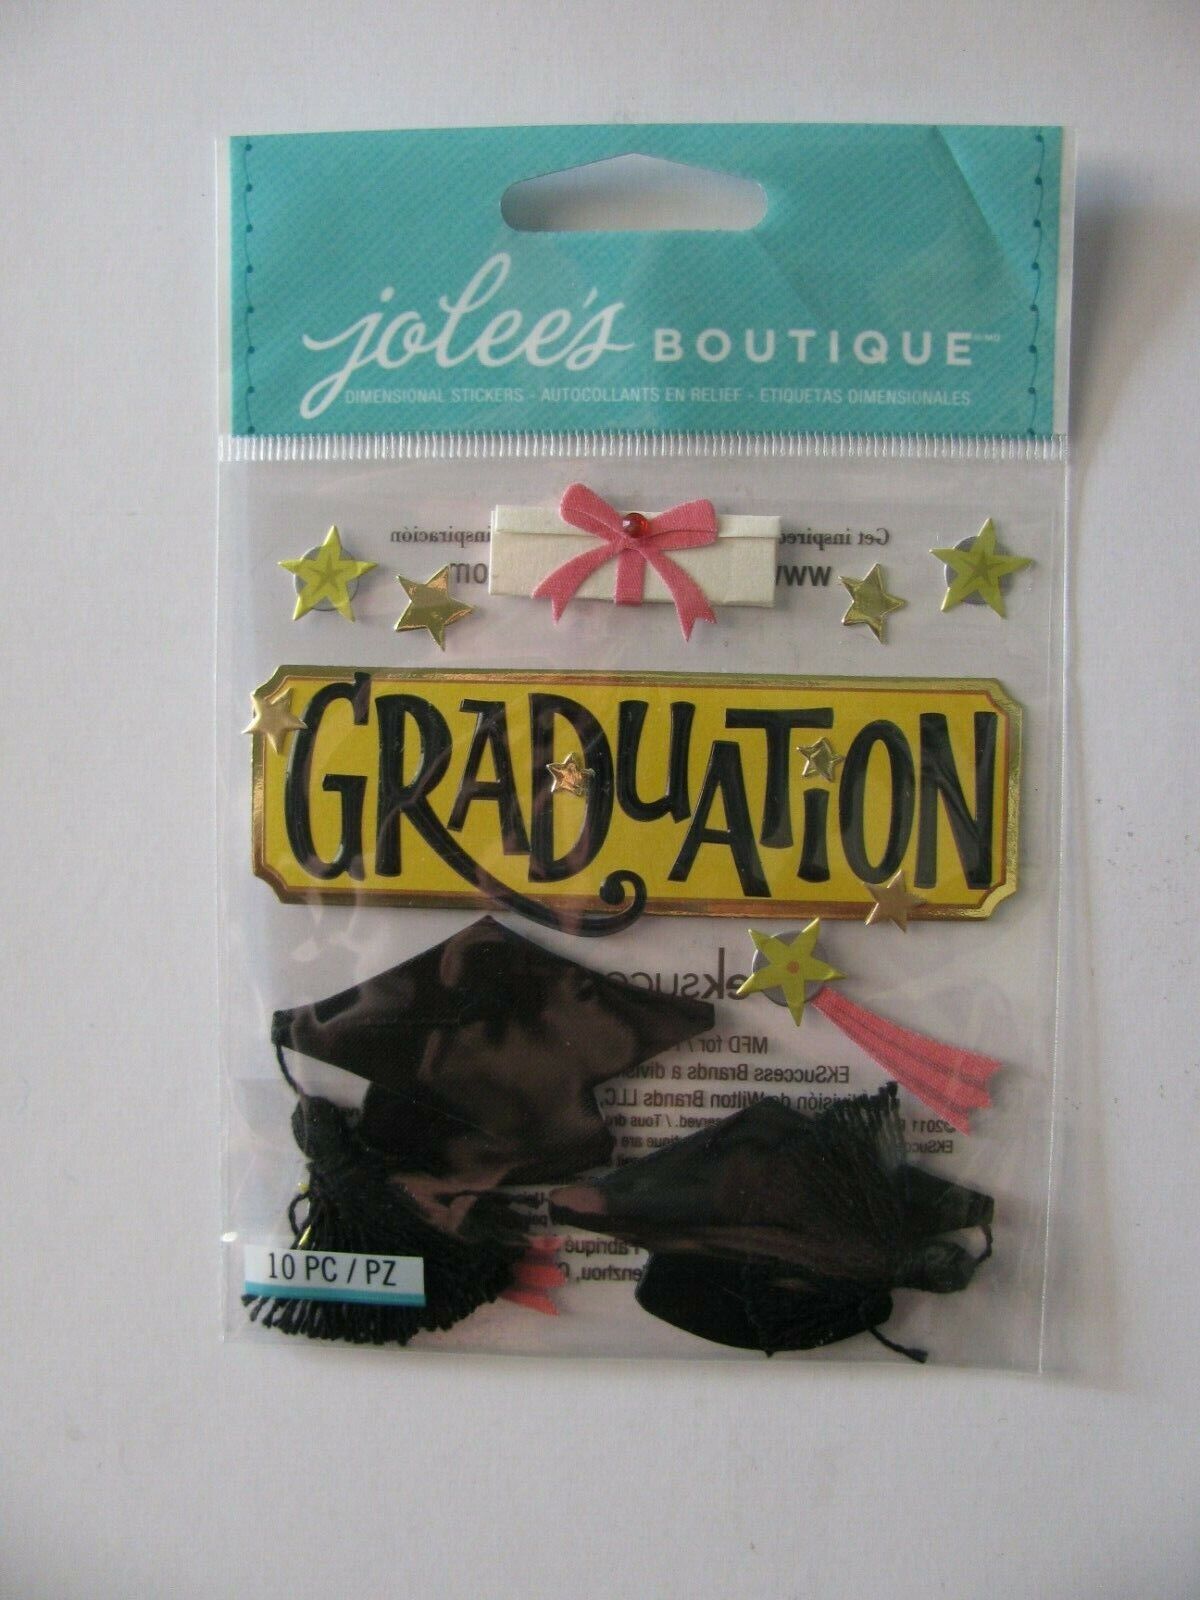 Jolee's Boutique Graduation Dimensional Embellishment Nip